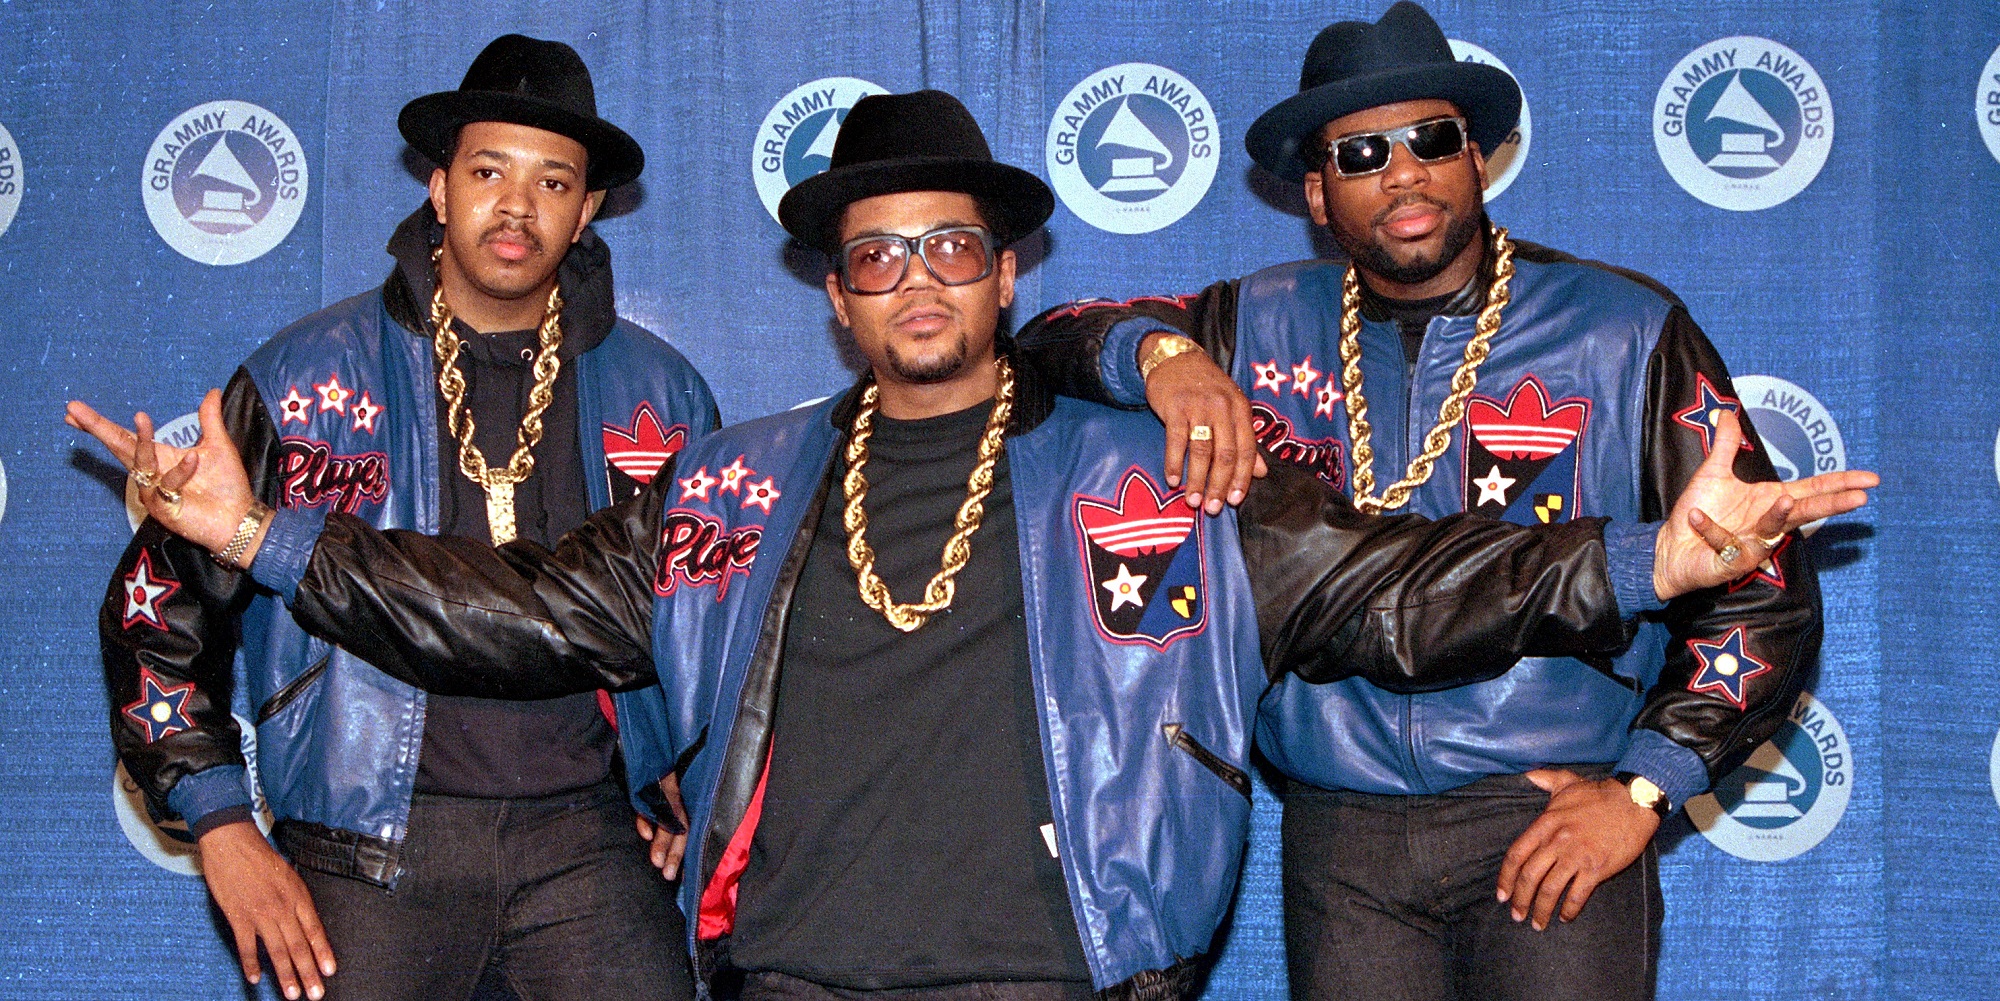 The rap group Run DMC poses at the 31st annual Grammy Awards in New York City on March 2, 1988. From left, Joseph "Run" Simmons, Darryl "DMC" McDaniels, and Jason Mizell "Jam Master Jay." (AP Photo/Mark Lennihan)